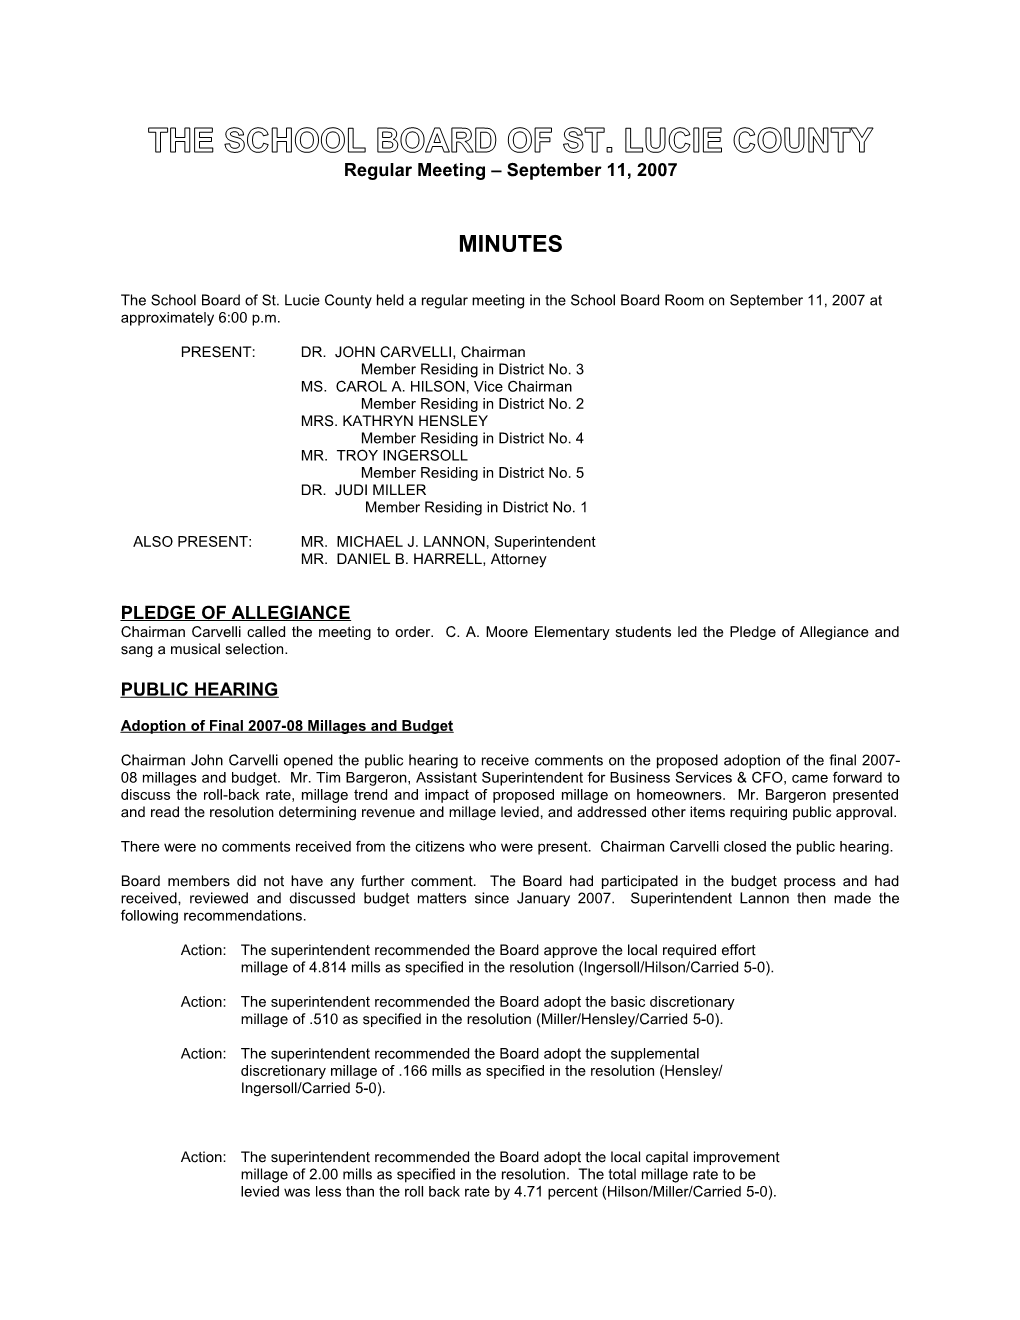 09-11-07 SLCSB Regular Meeting Minutes